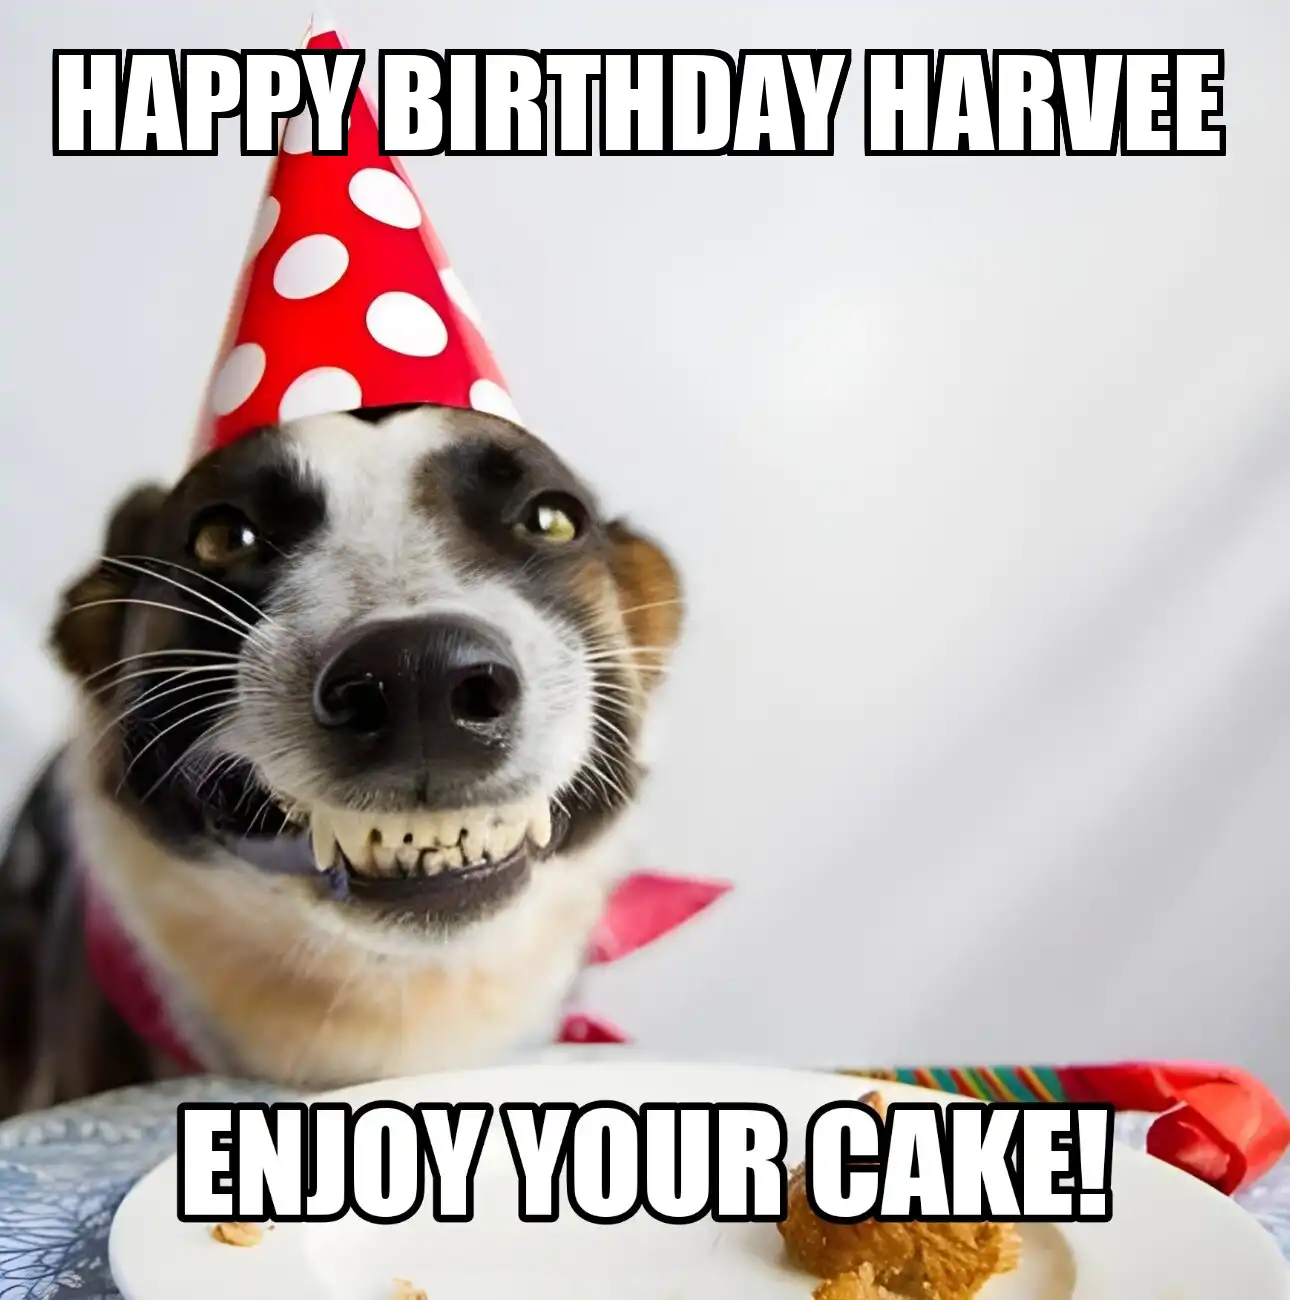 Happy Birthday Harvee Enjoy Your Cake Dog Meme